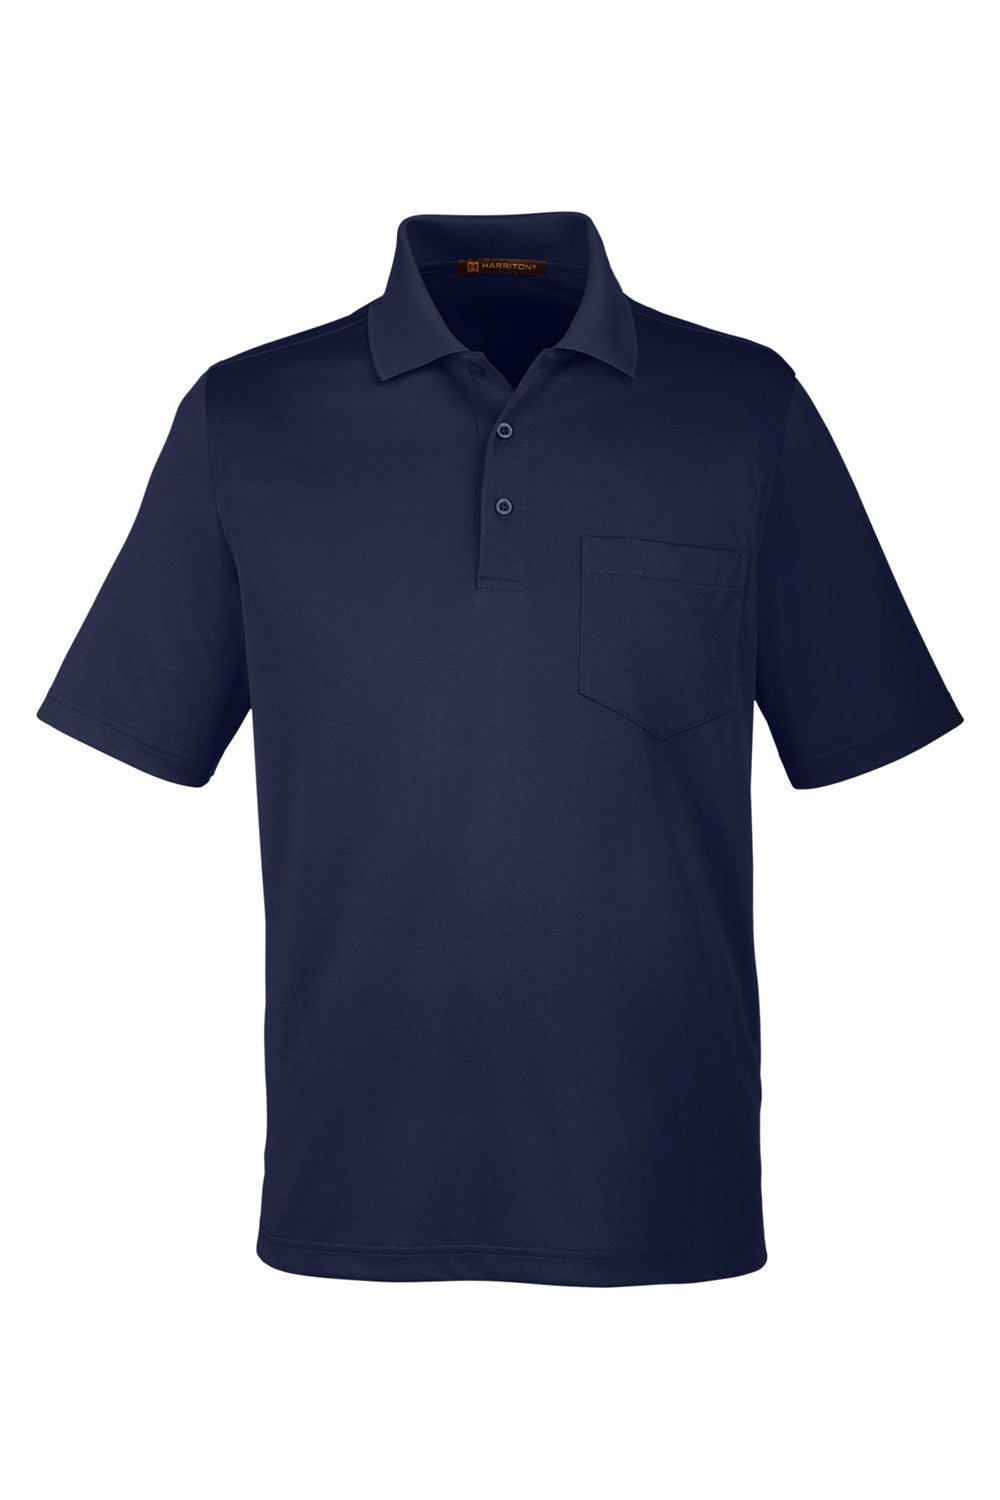 Harriton M348P Mens Advantage Performance Moisture Wicking Short Sleeve Polo Shirt w/ Pocket Dark Navy Blue Flat Front